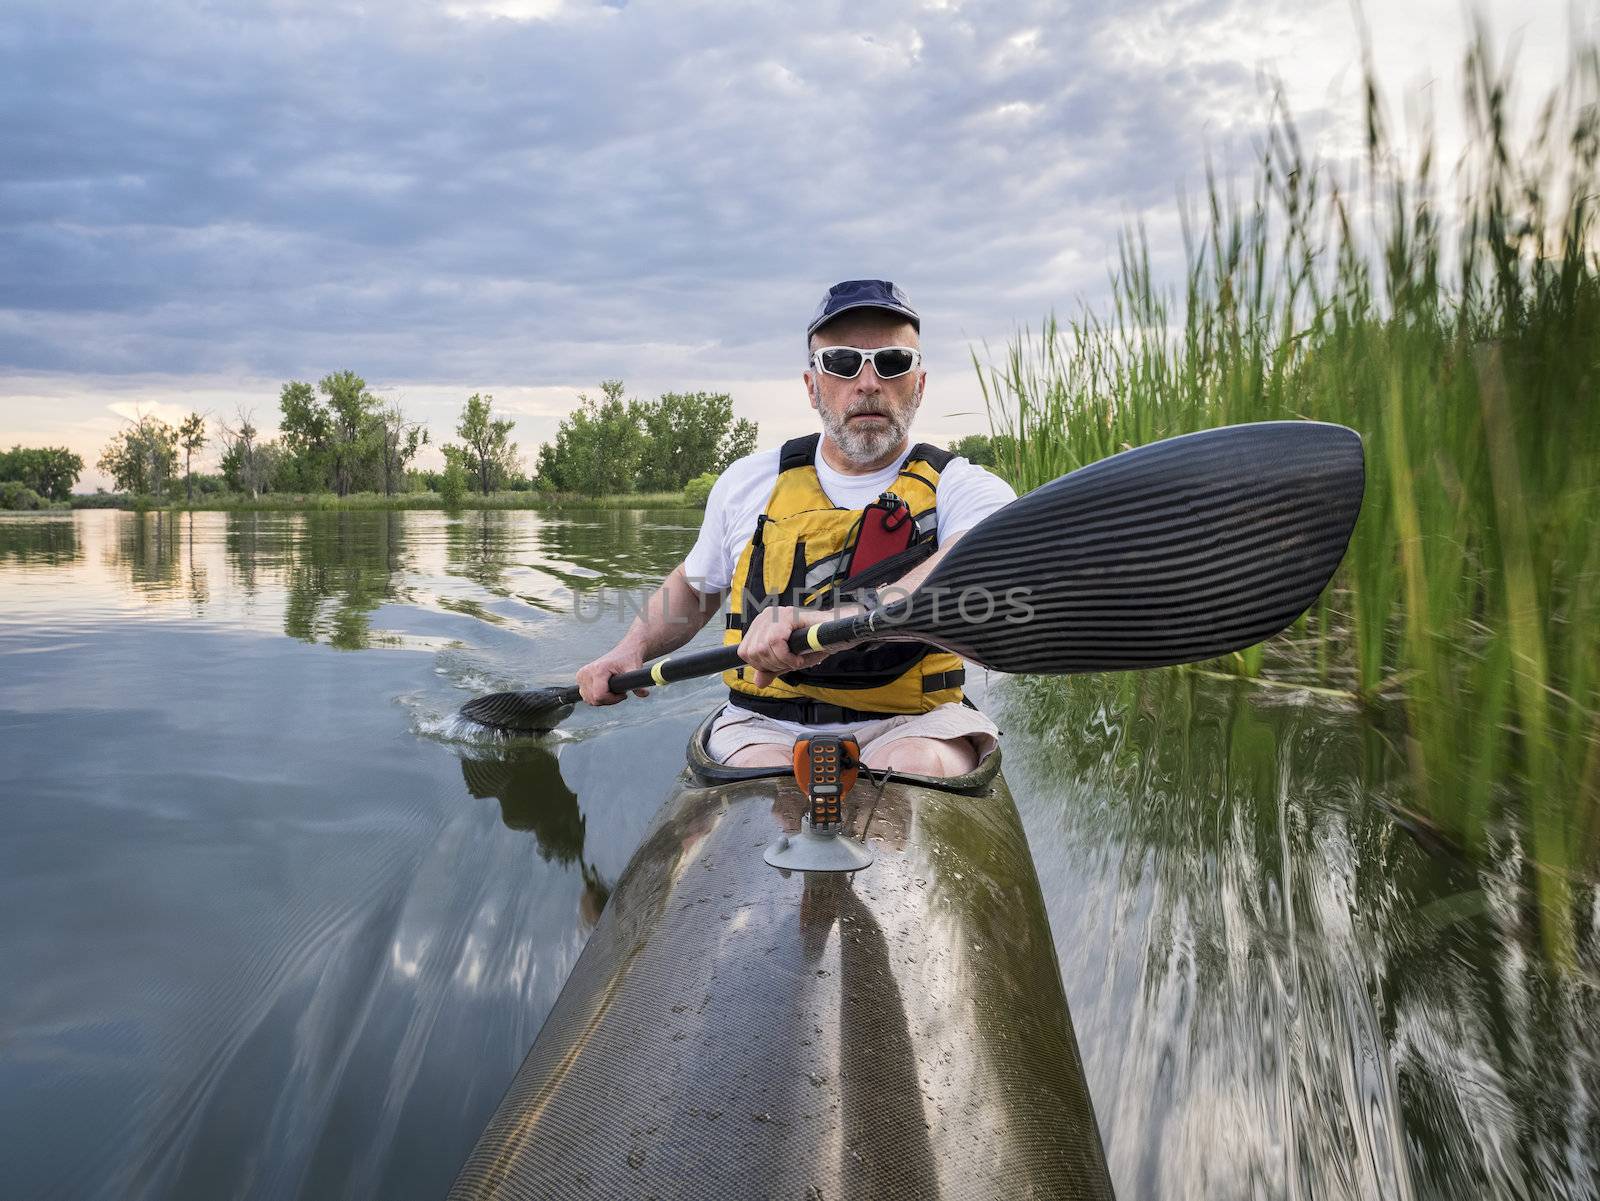 paddling sea kayak on a lake by PixelsAway